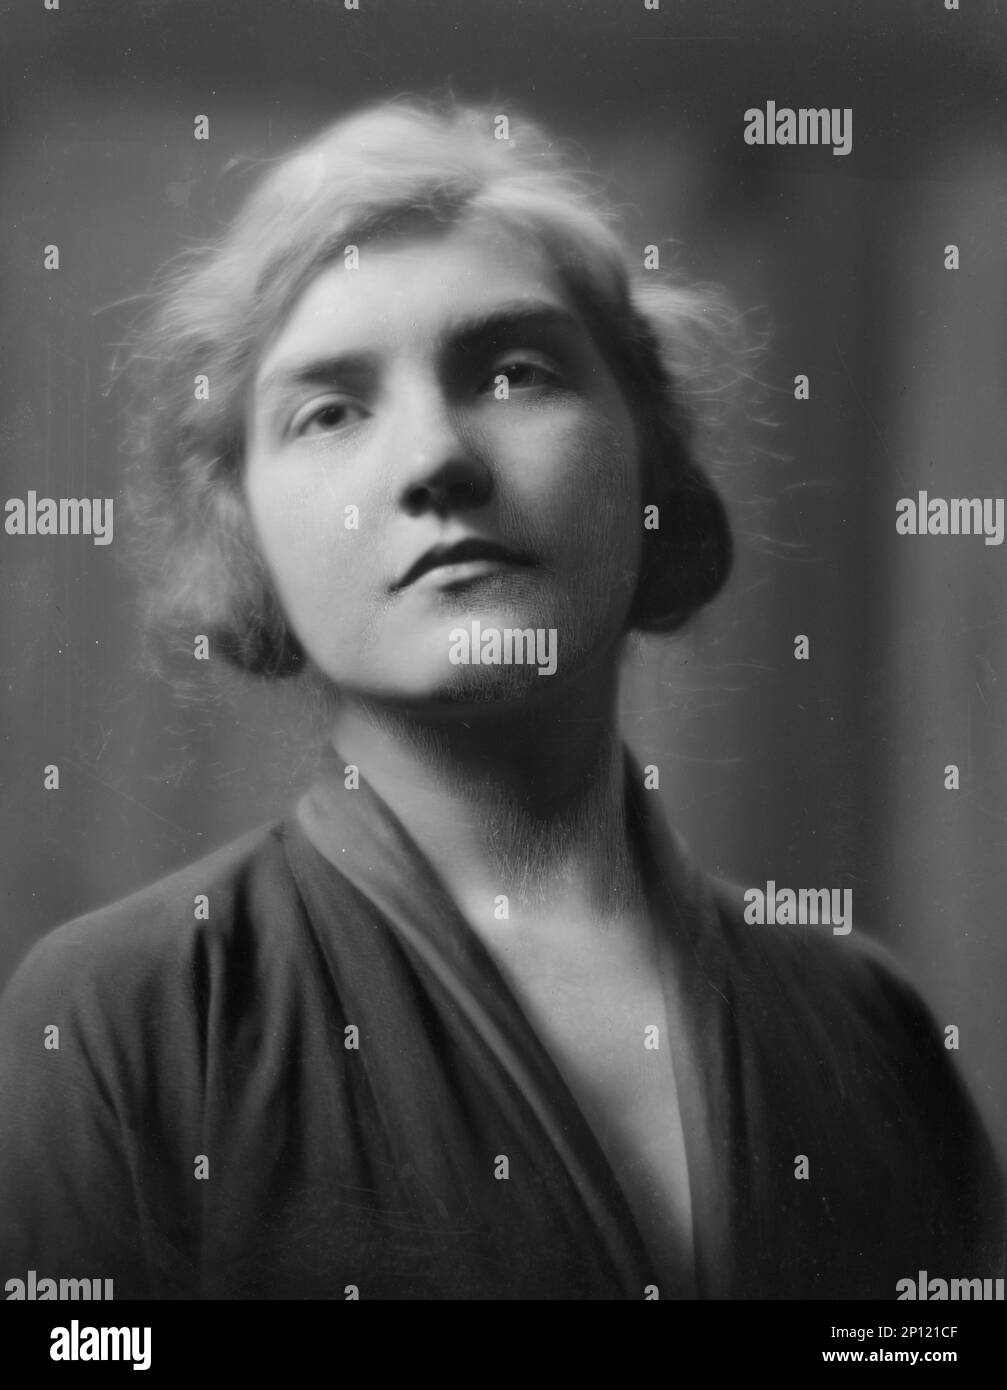 Kelly, Madeline, Miss, portrait photograph, 1917 Stock Photo - Alamy